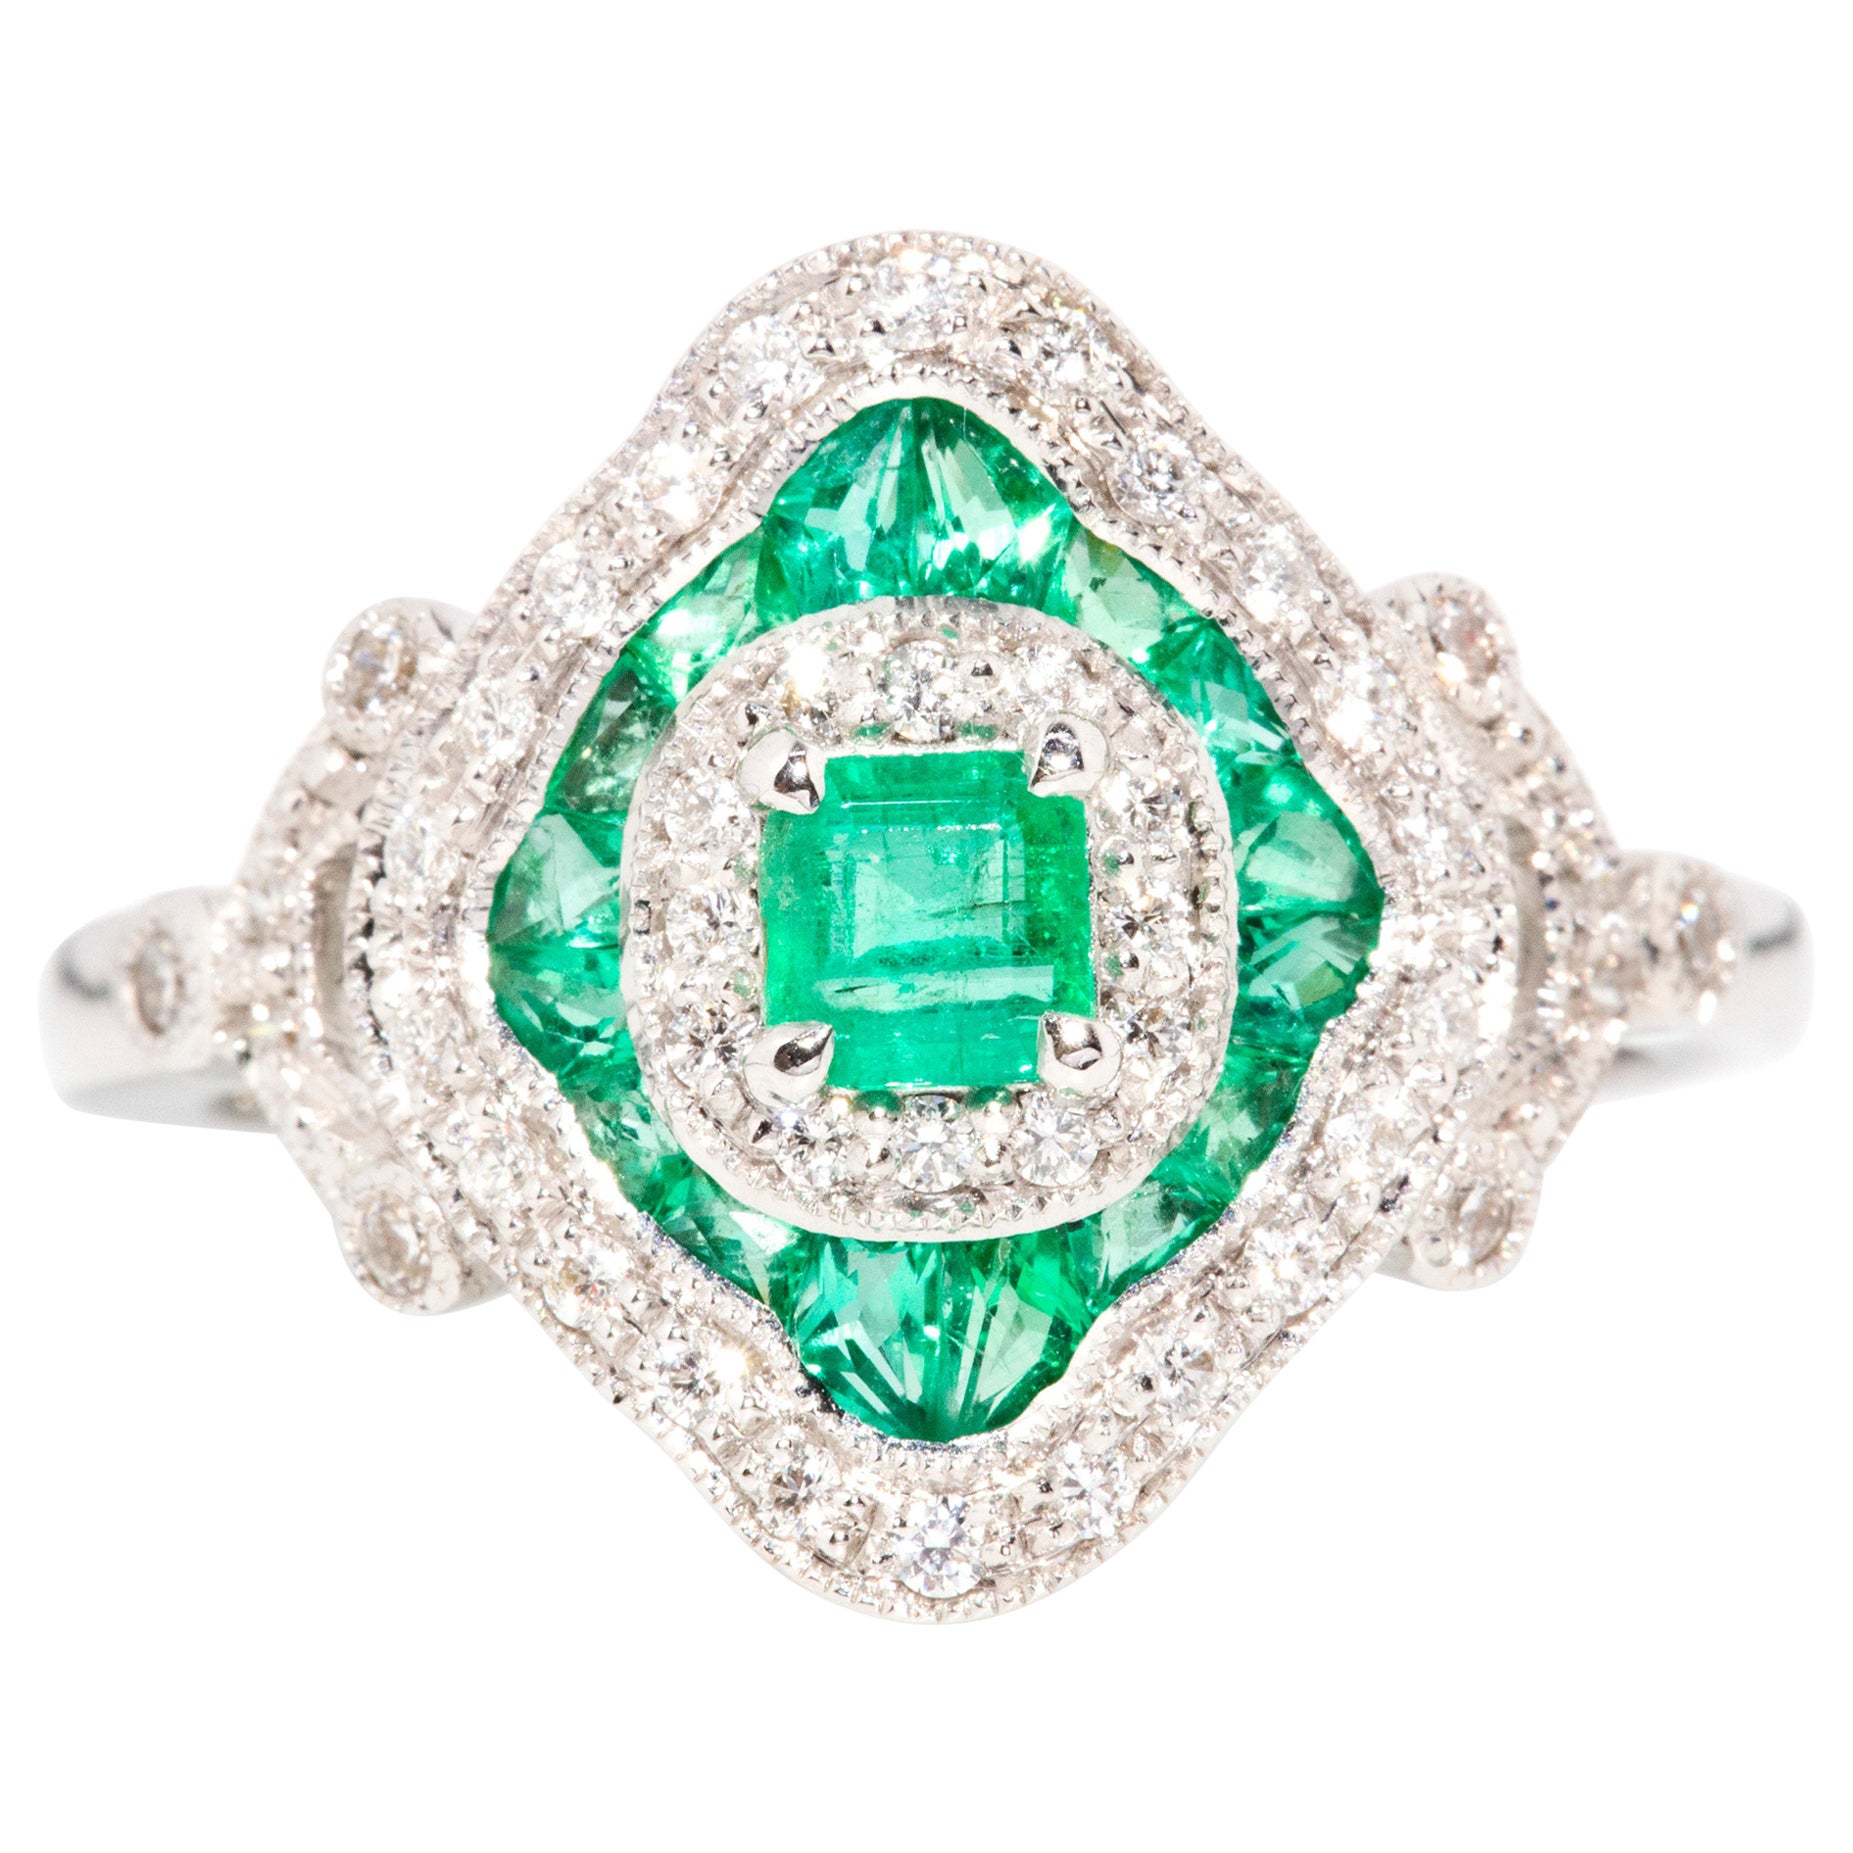 Contemporary Emerald & Diamond Art Deco-Inspired 18 Carat White Gold Ring